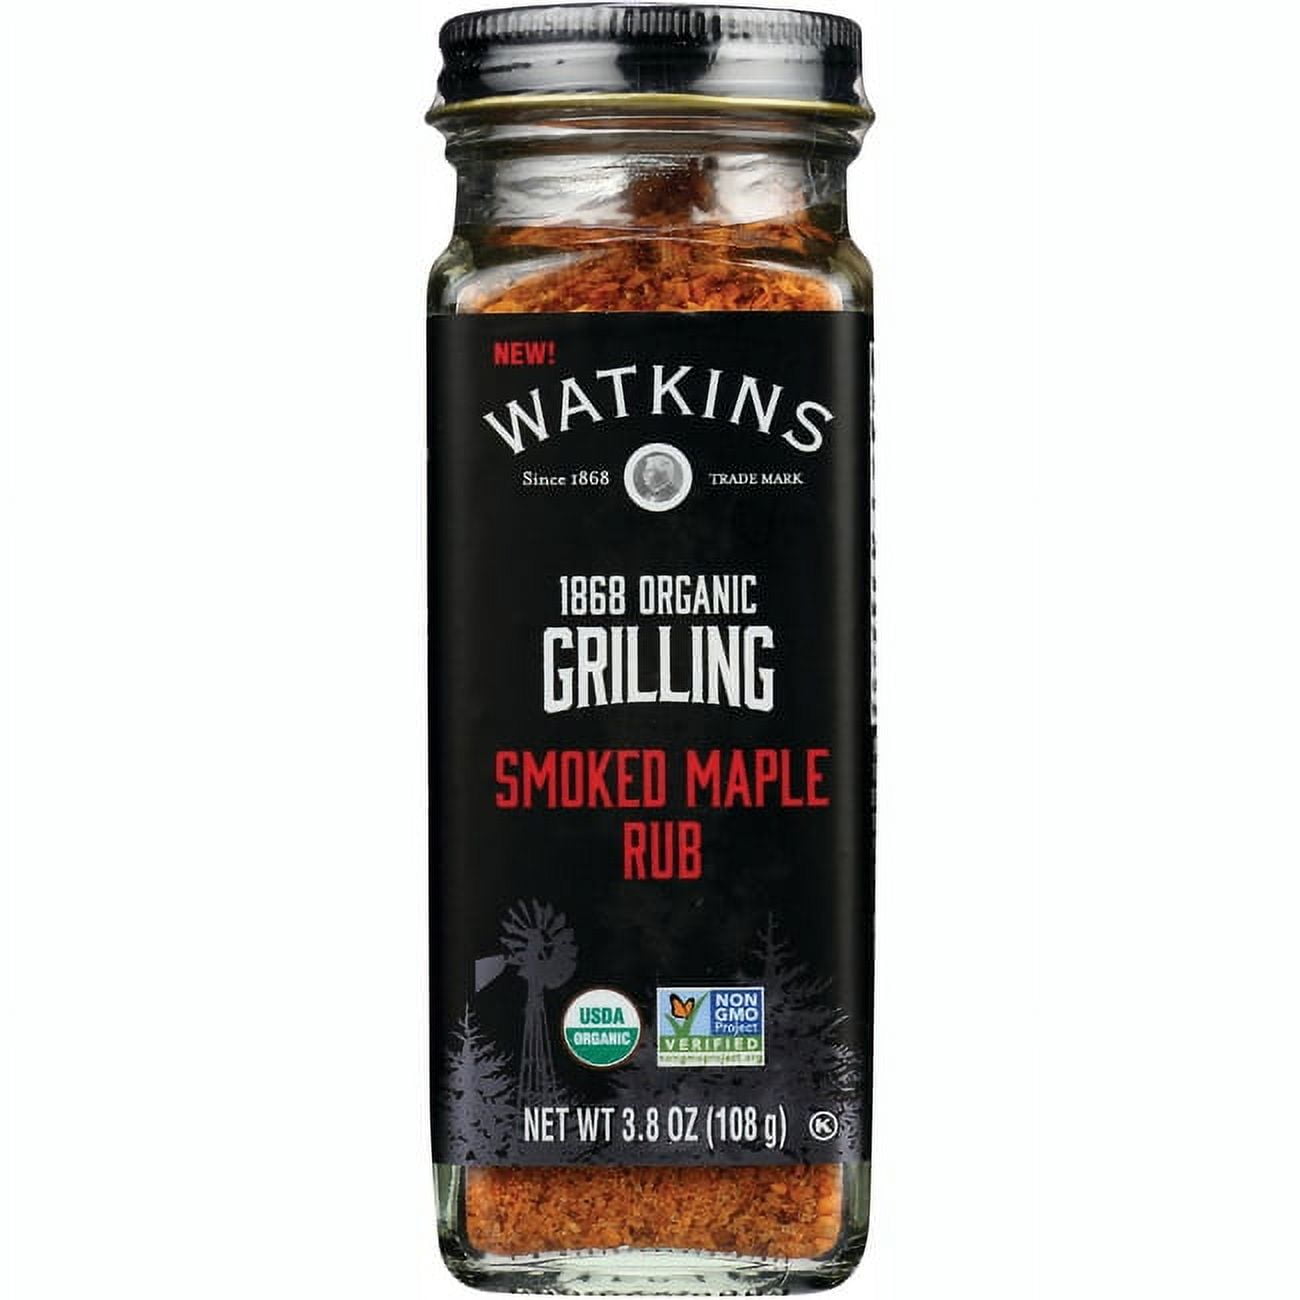 Watkins Inc. Organic Grilling Smoked Maple Rub 3.8 oz